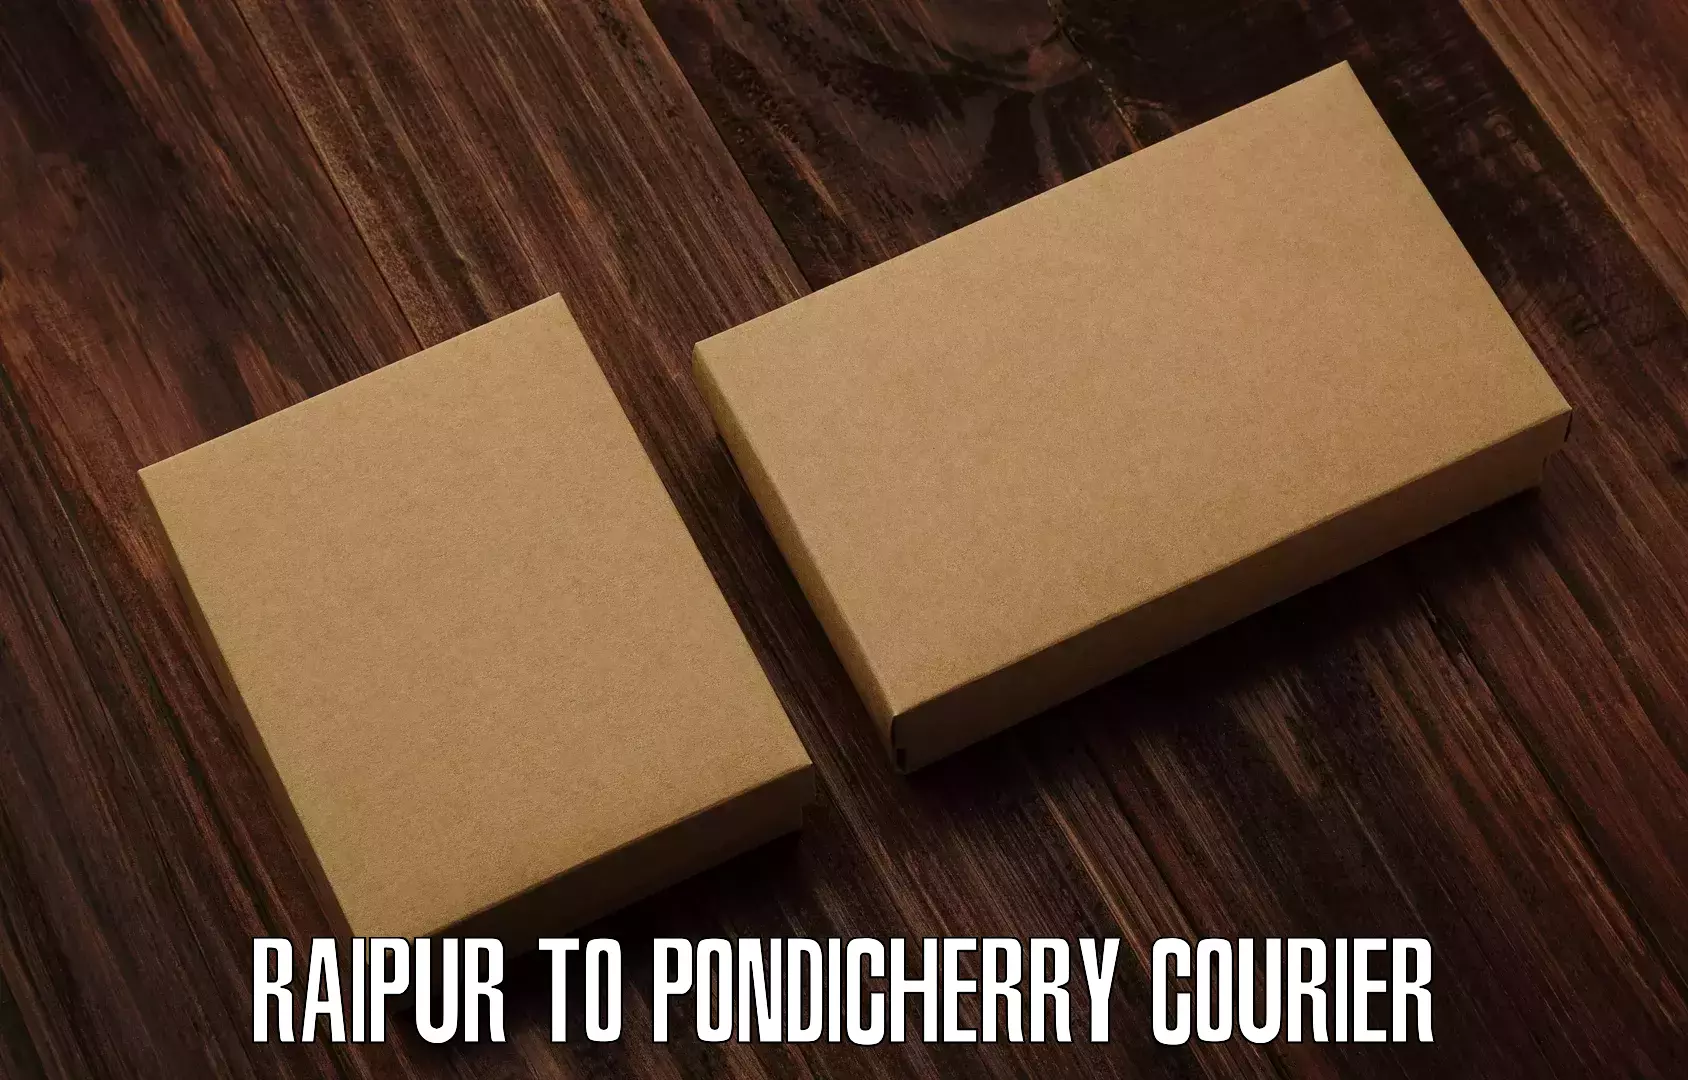 Logistics service provider Raipur to Pondicherry University